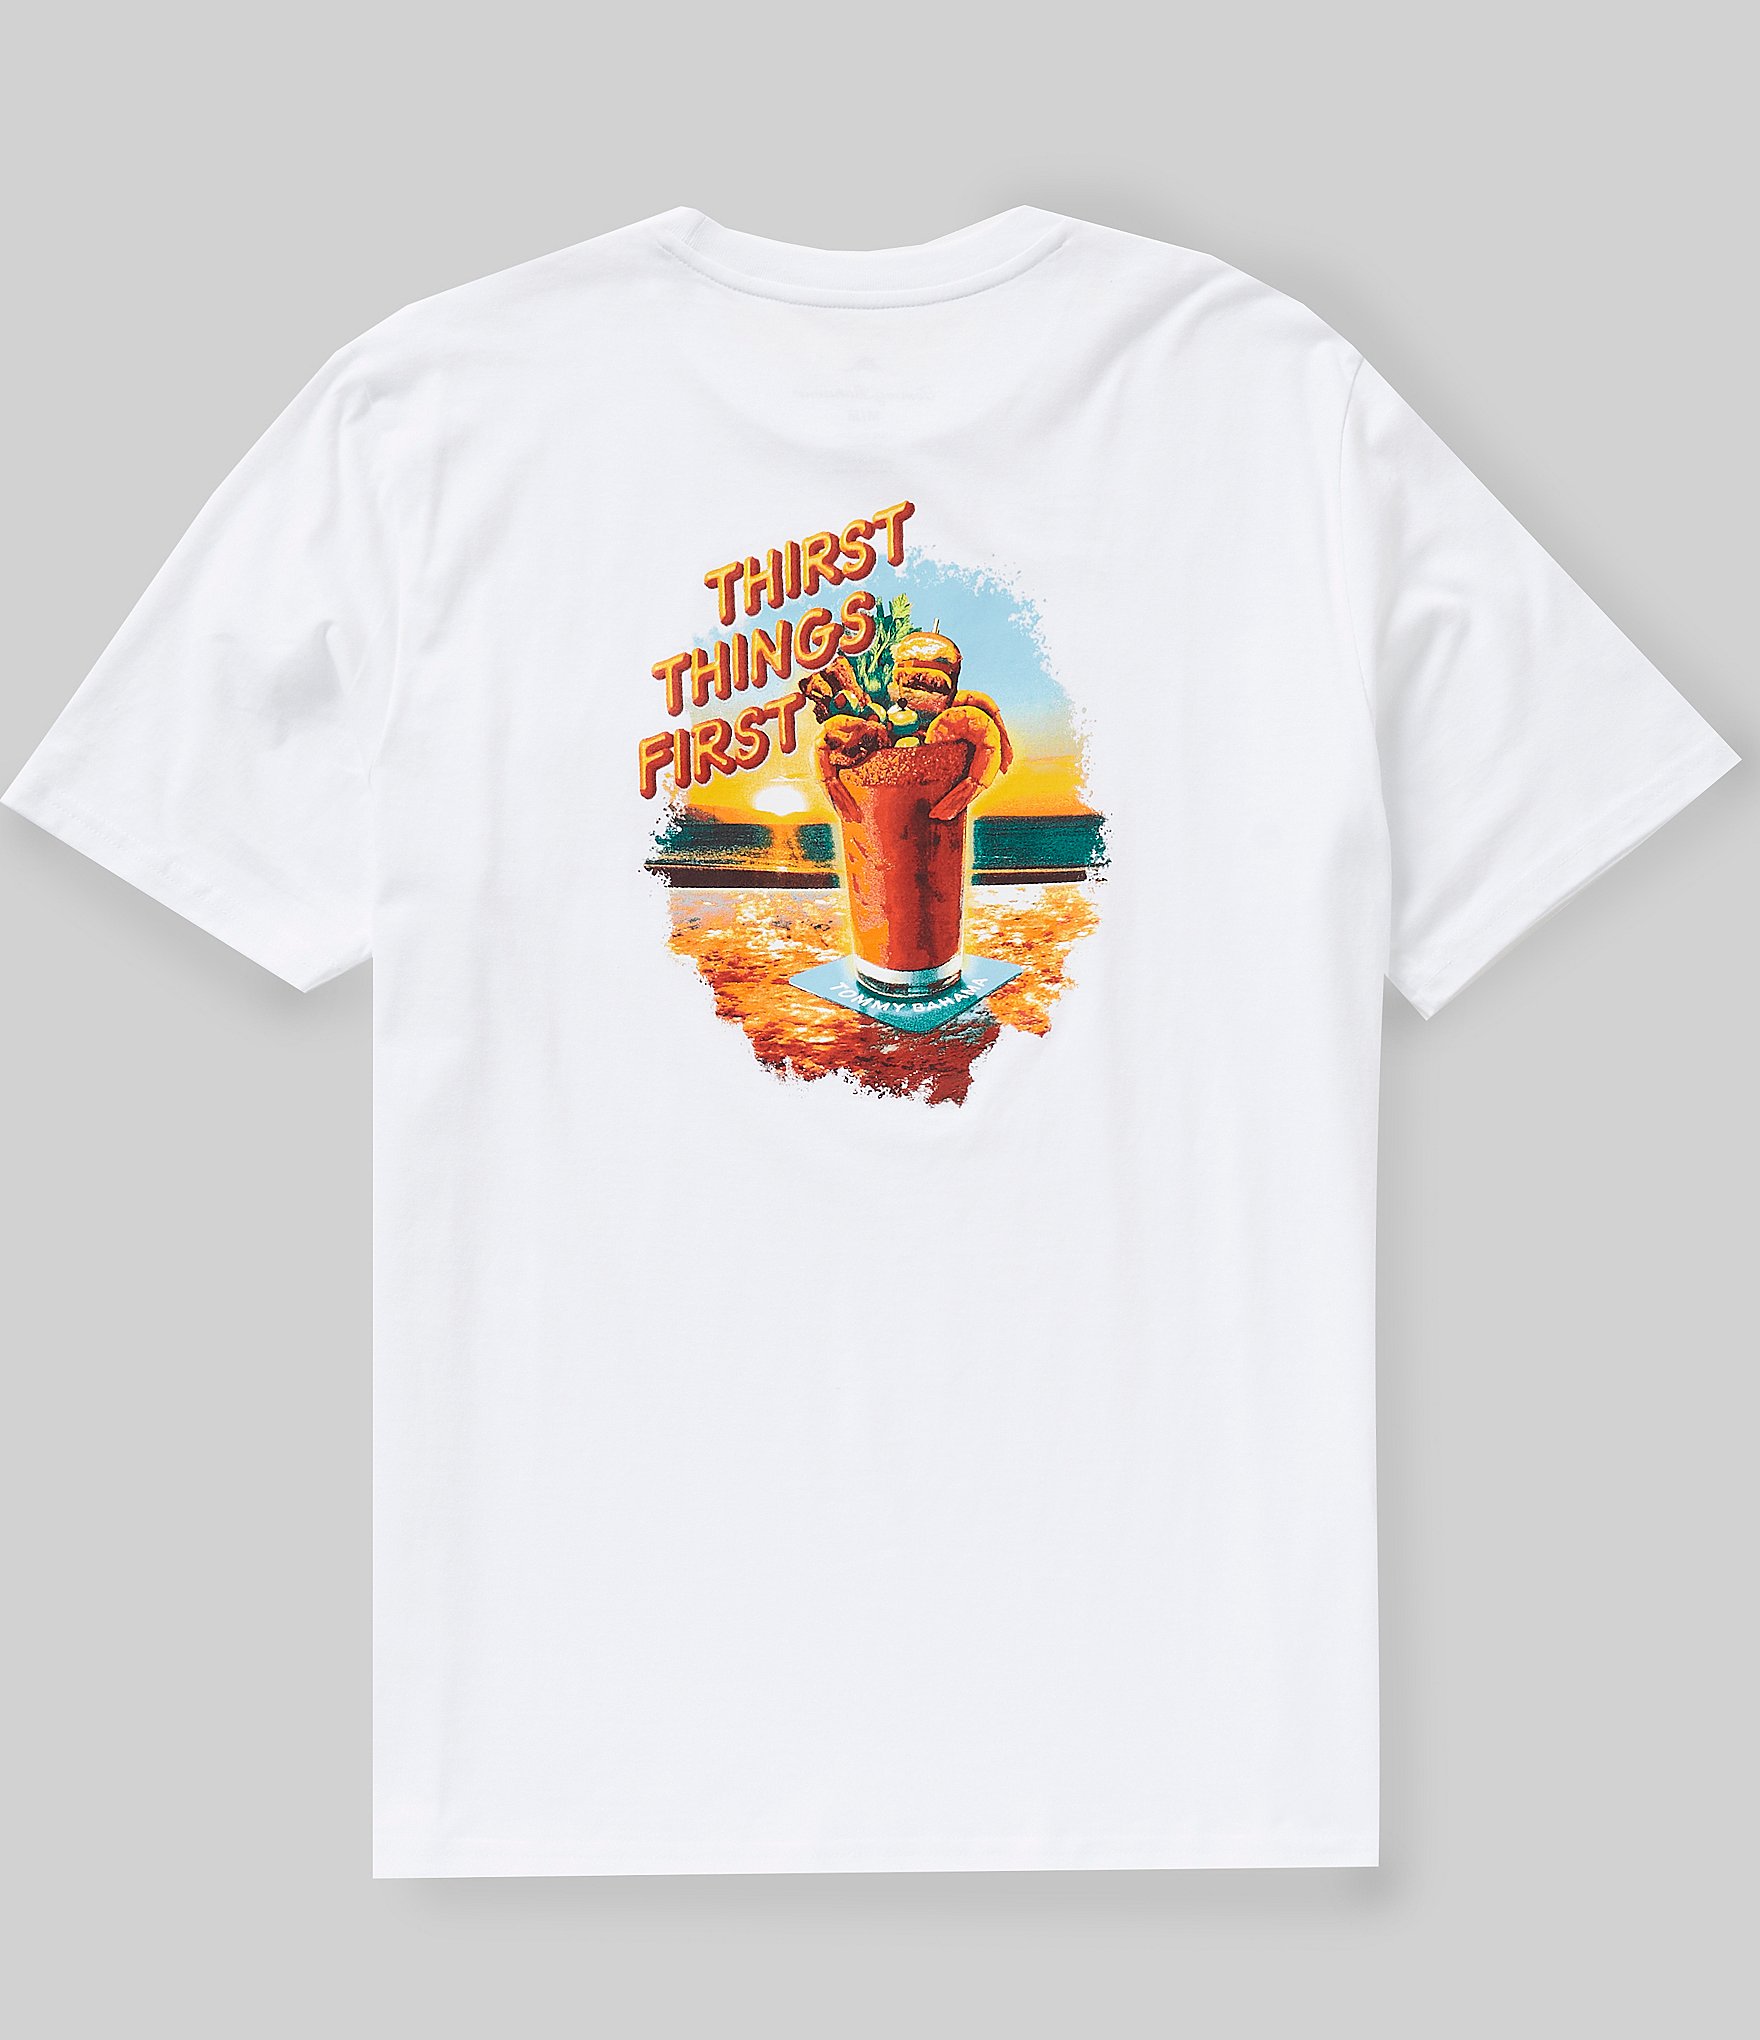 Tommy Bahama Thirst Things First Short-Sleeve T-Shirt | Dillard's